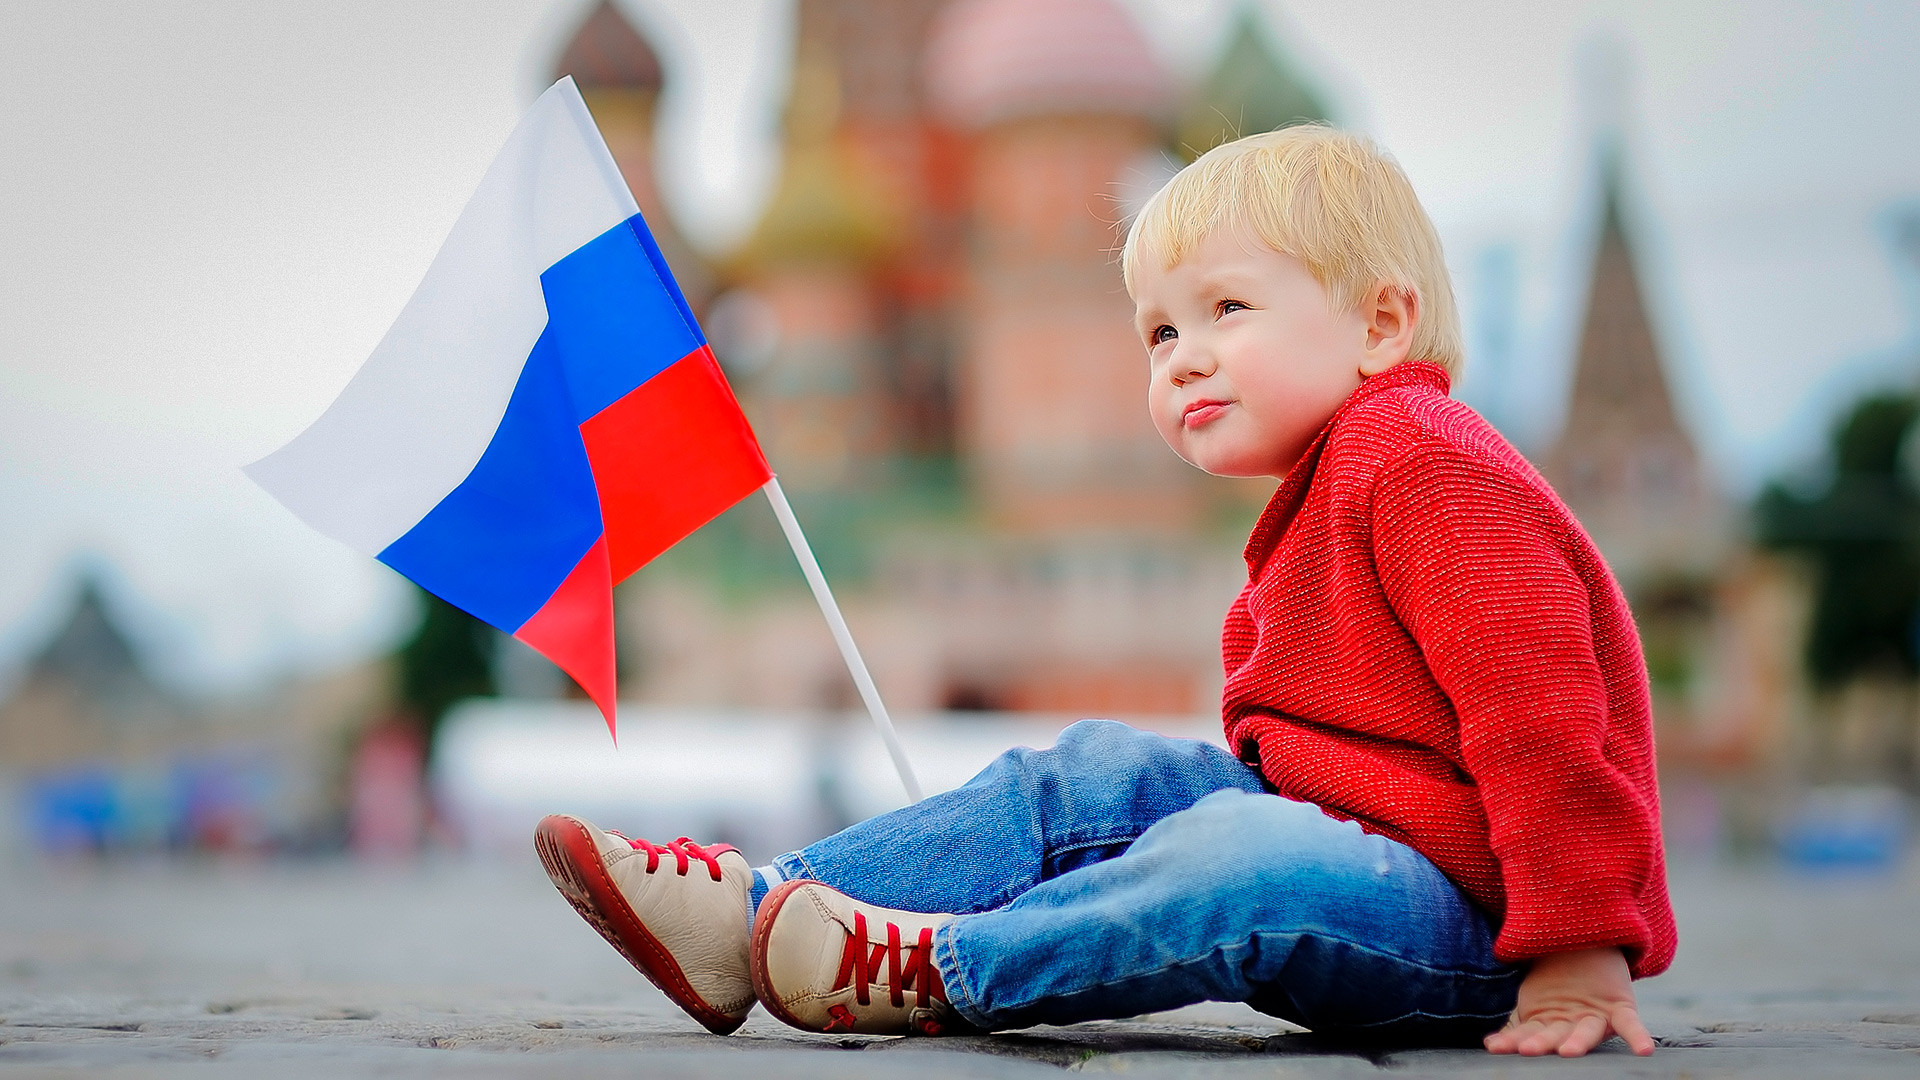 Английский ребенок россия. Флаг для детей. Флаг России для детей. Дети с российским флагом. Флажки для детей.